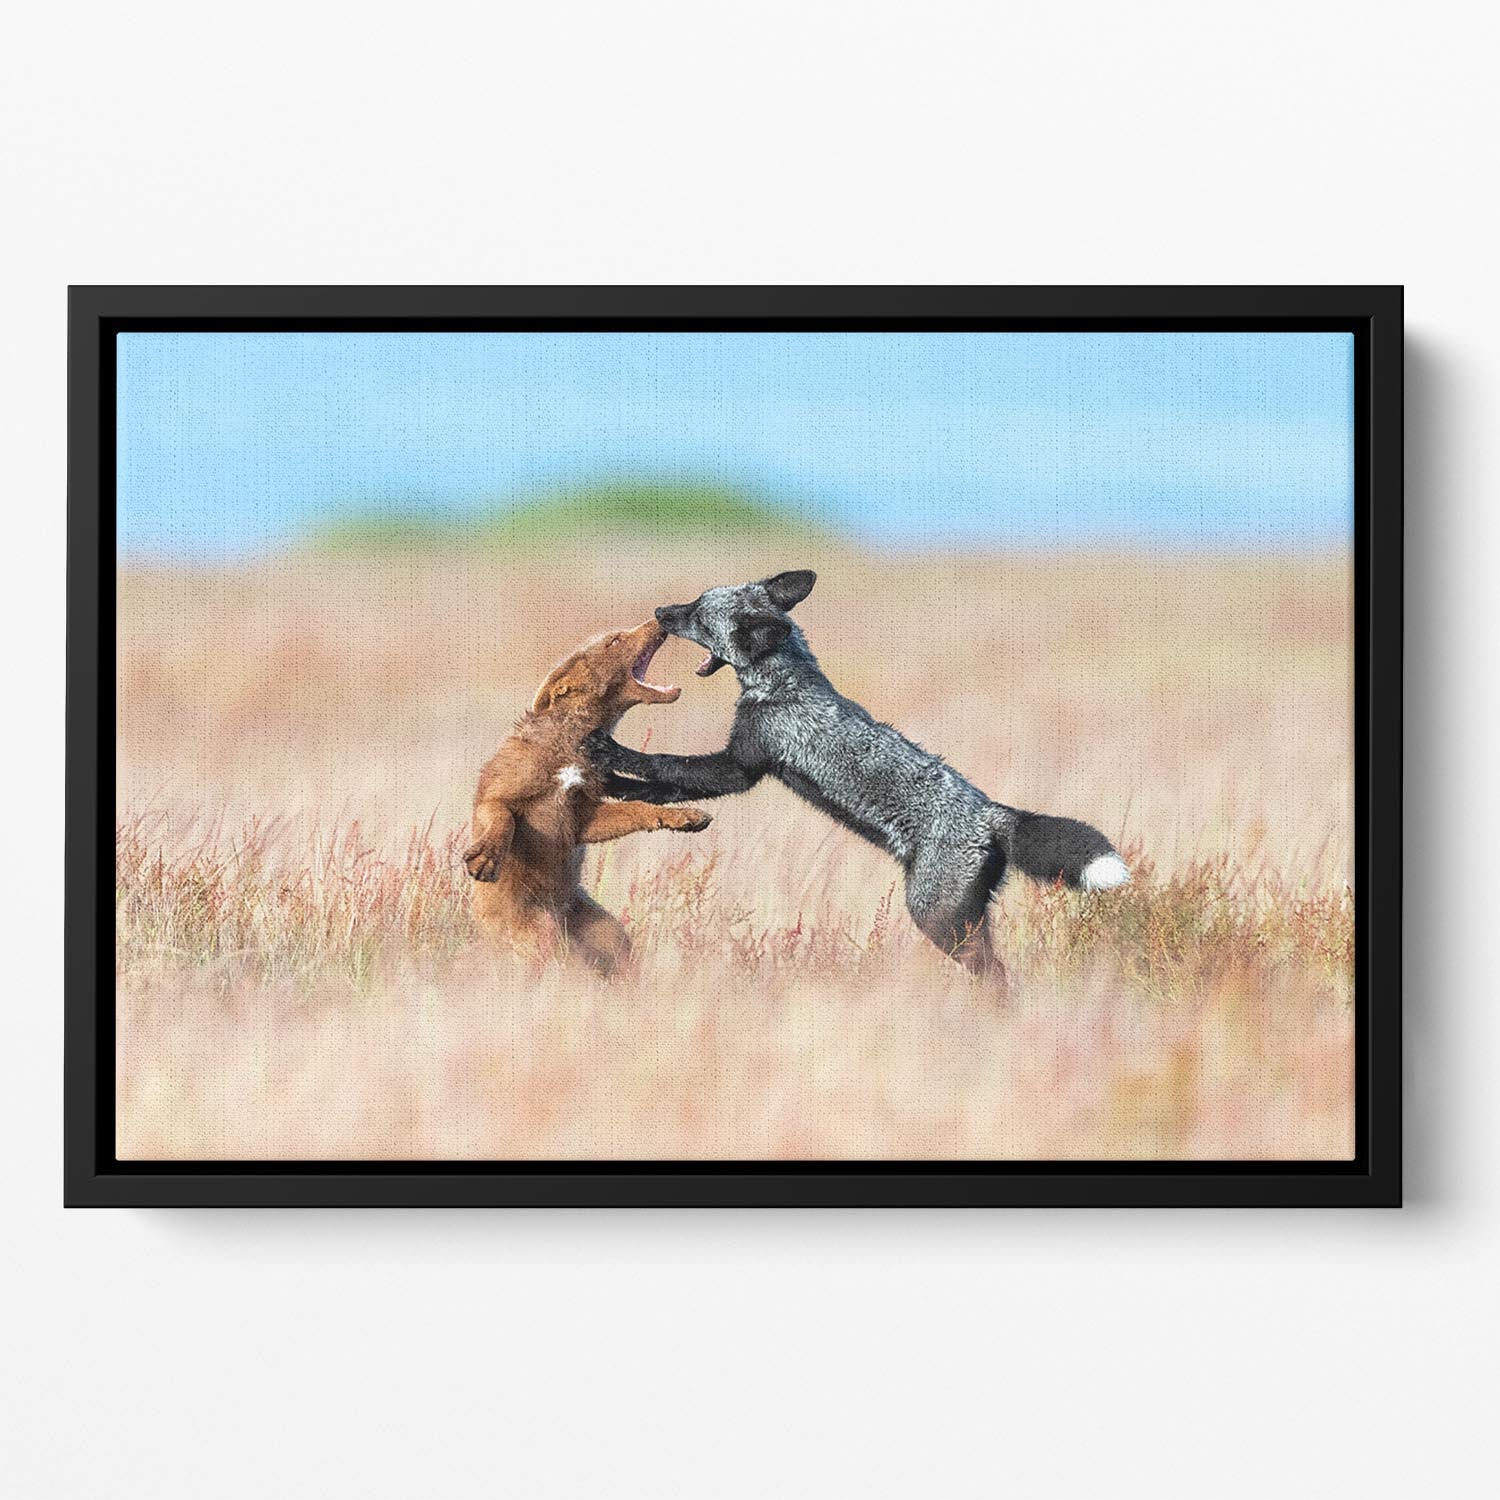 Two Foxes Wrestling Floating Framed Canvas - Canvas Art Rocks - 2